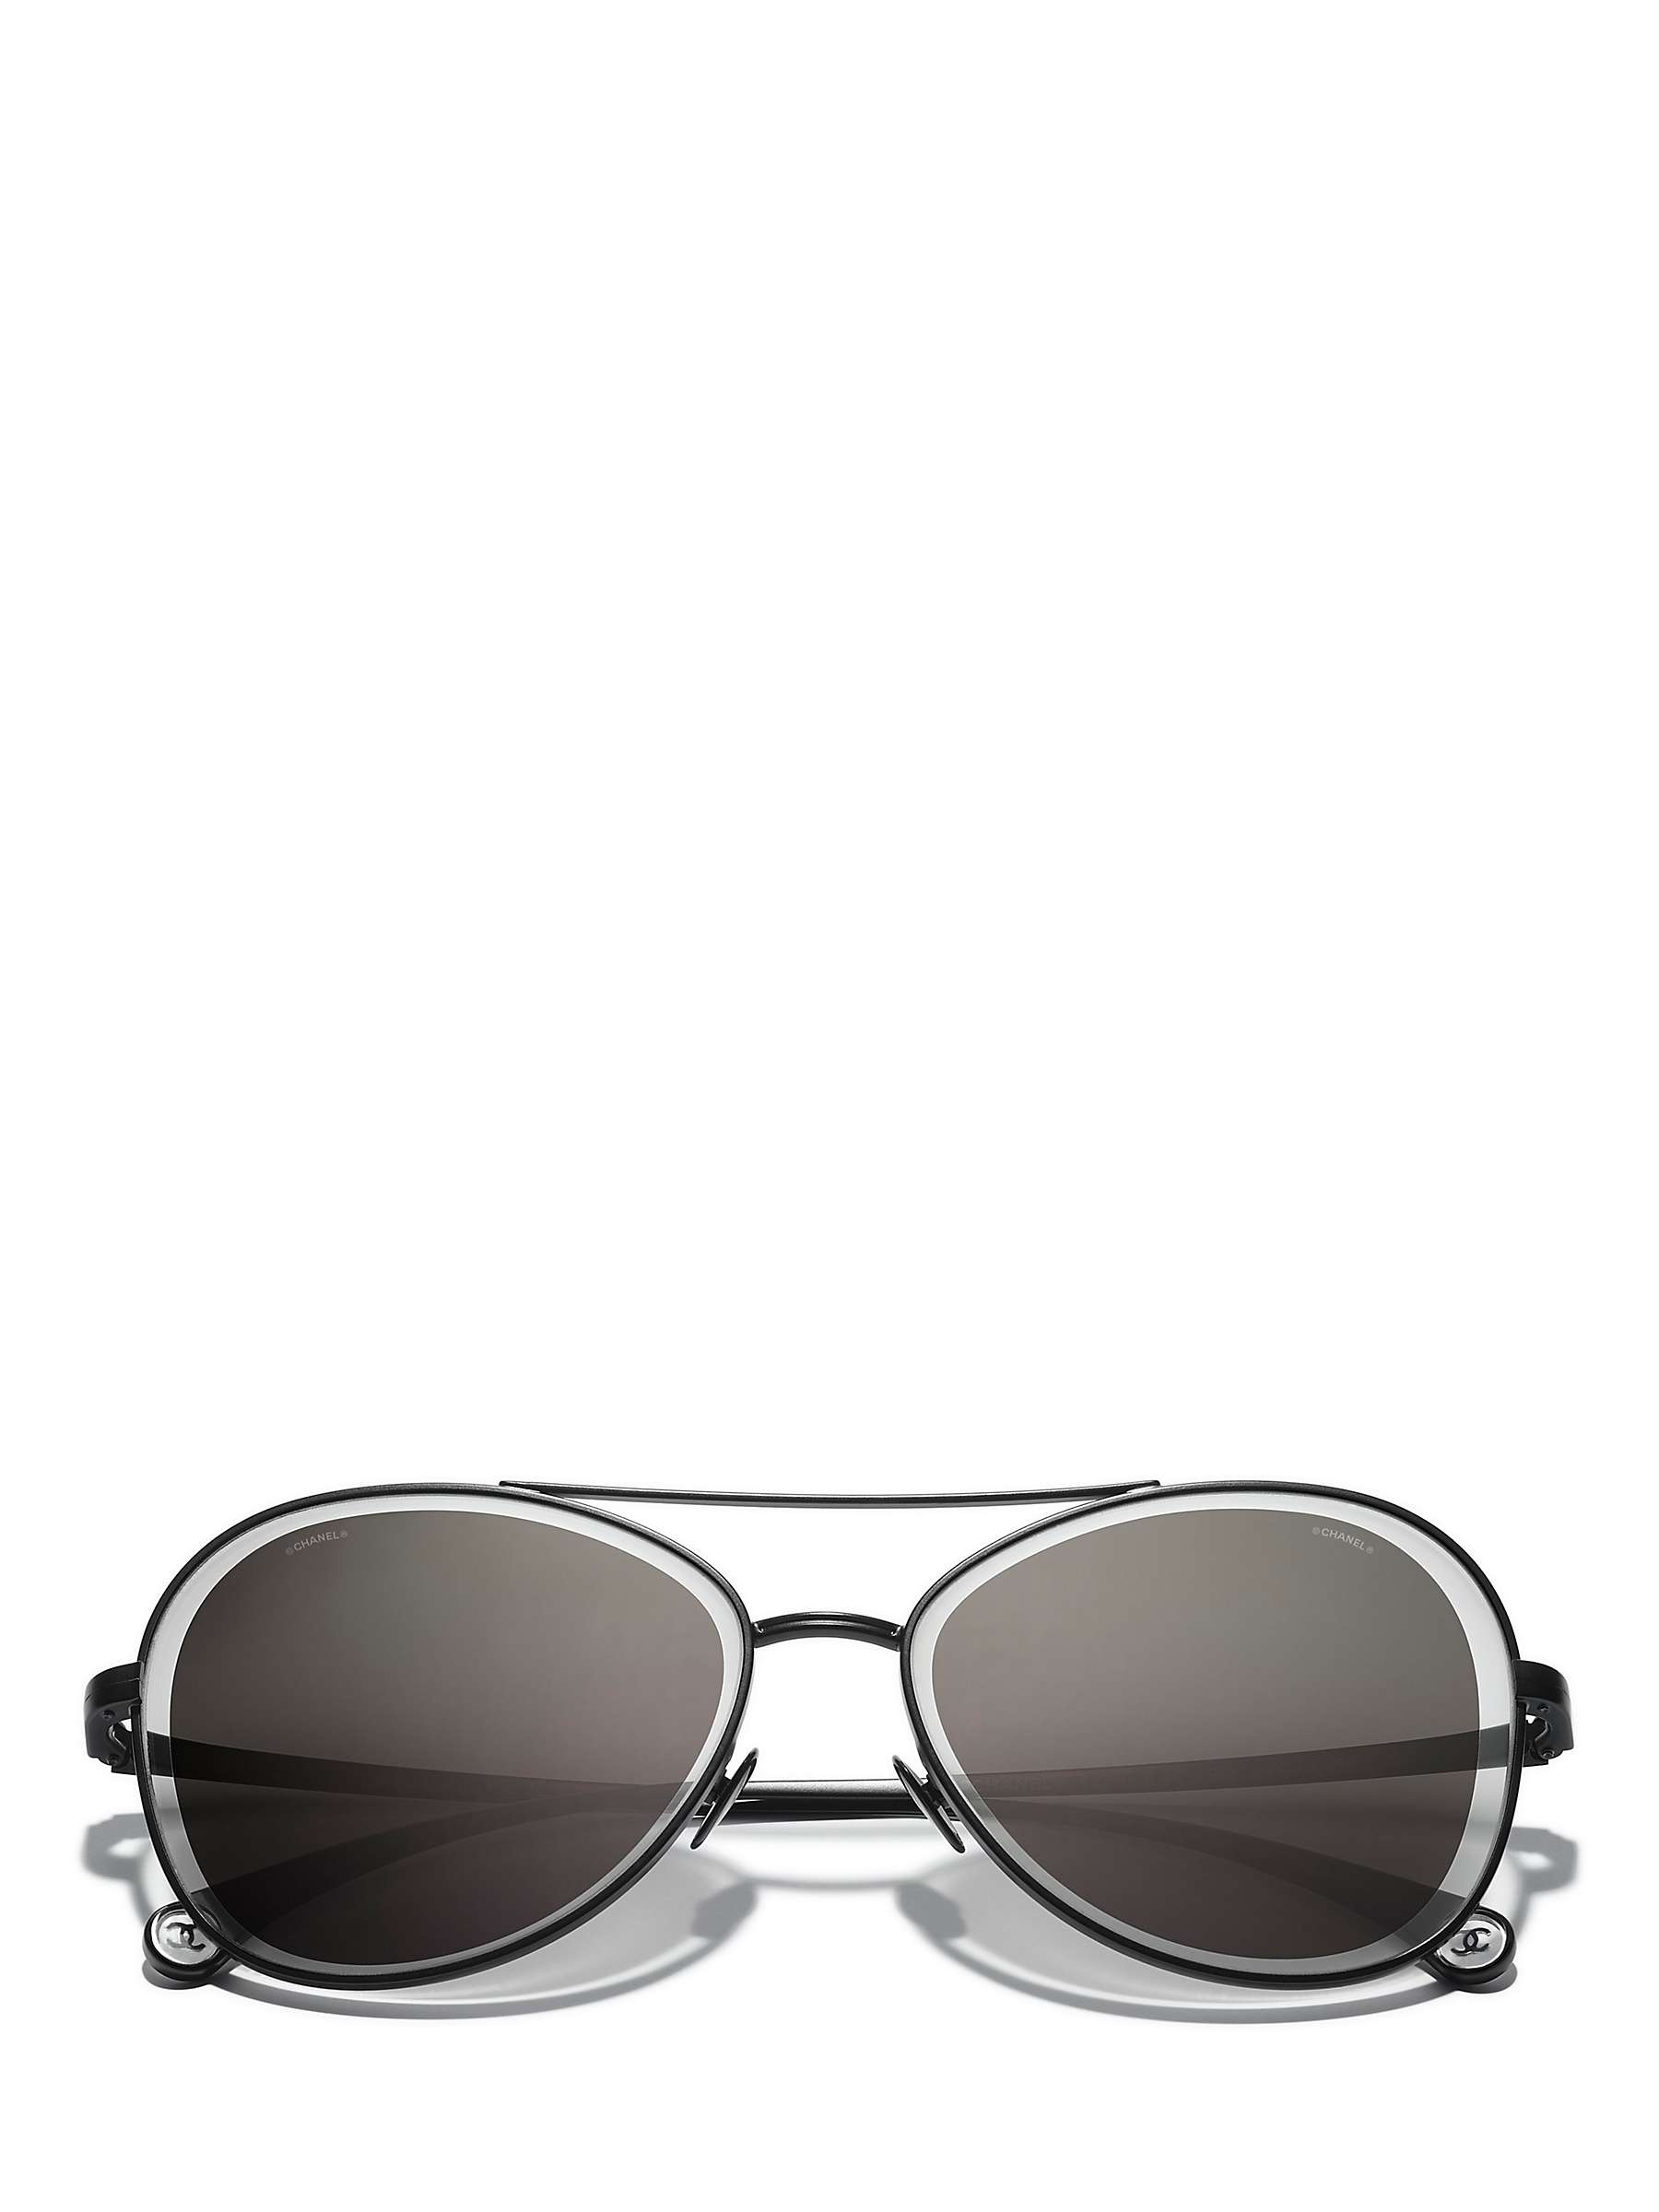 Buy CHANEL Pilot Sunglasses CH4260, Matte Black/Mirror Black Online at johnlewis.com